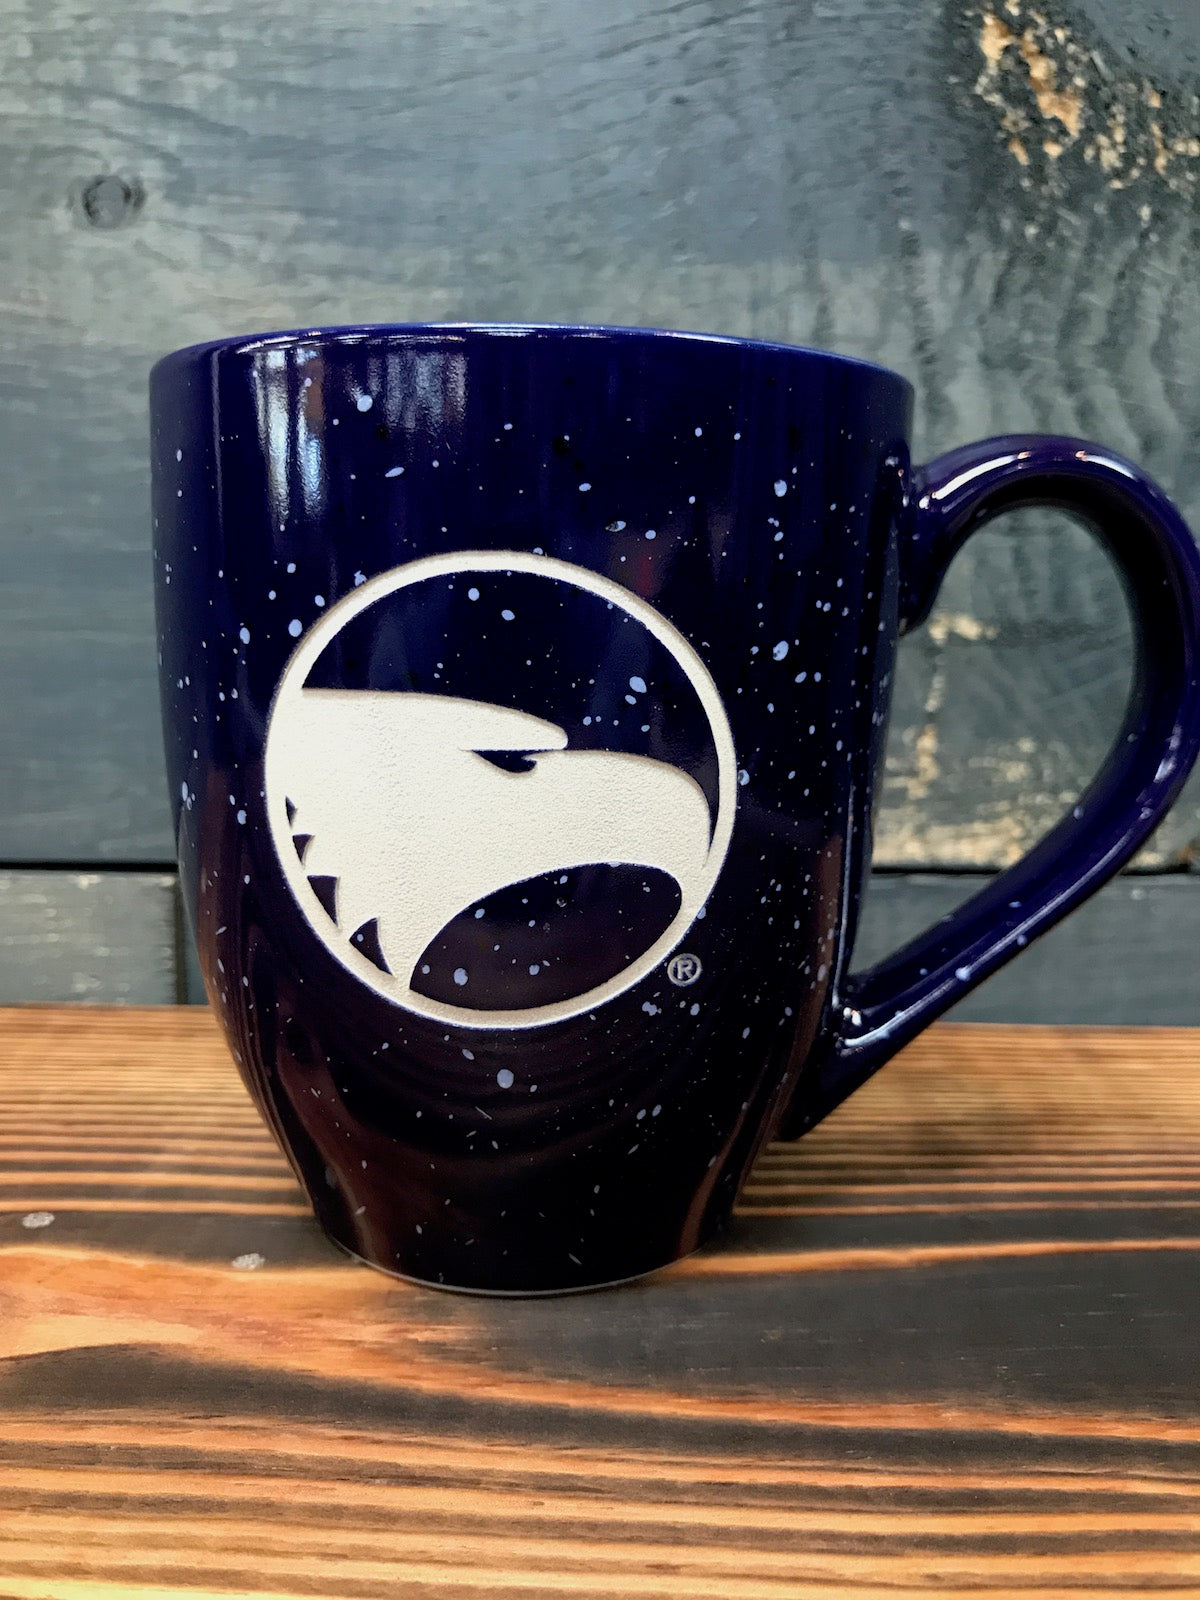 Etched Ceramic Coffee Mug - Speckled Navy